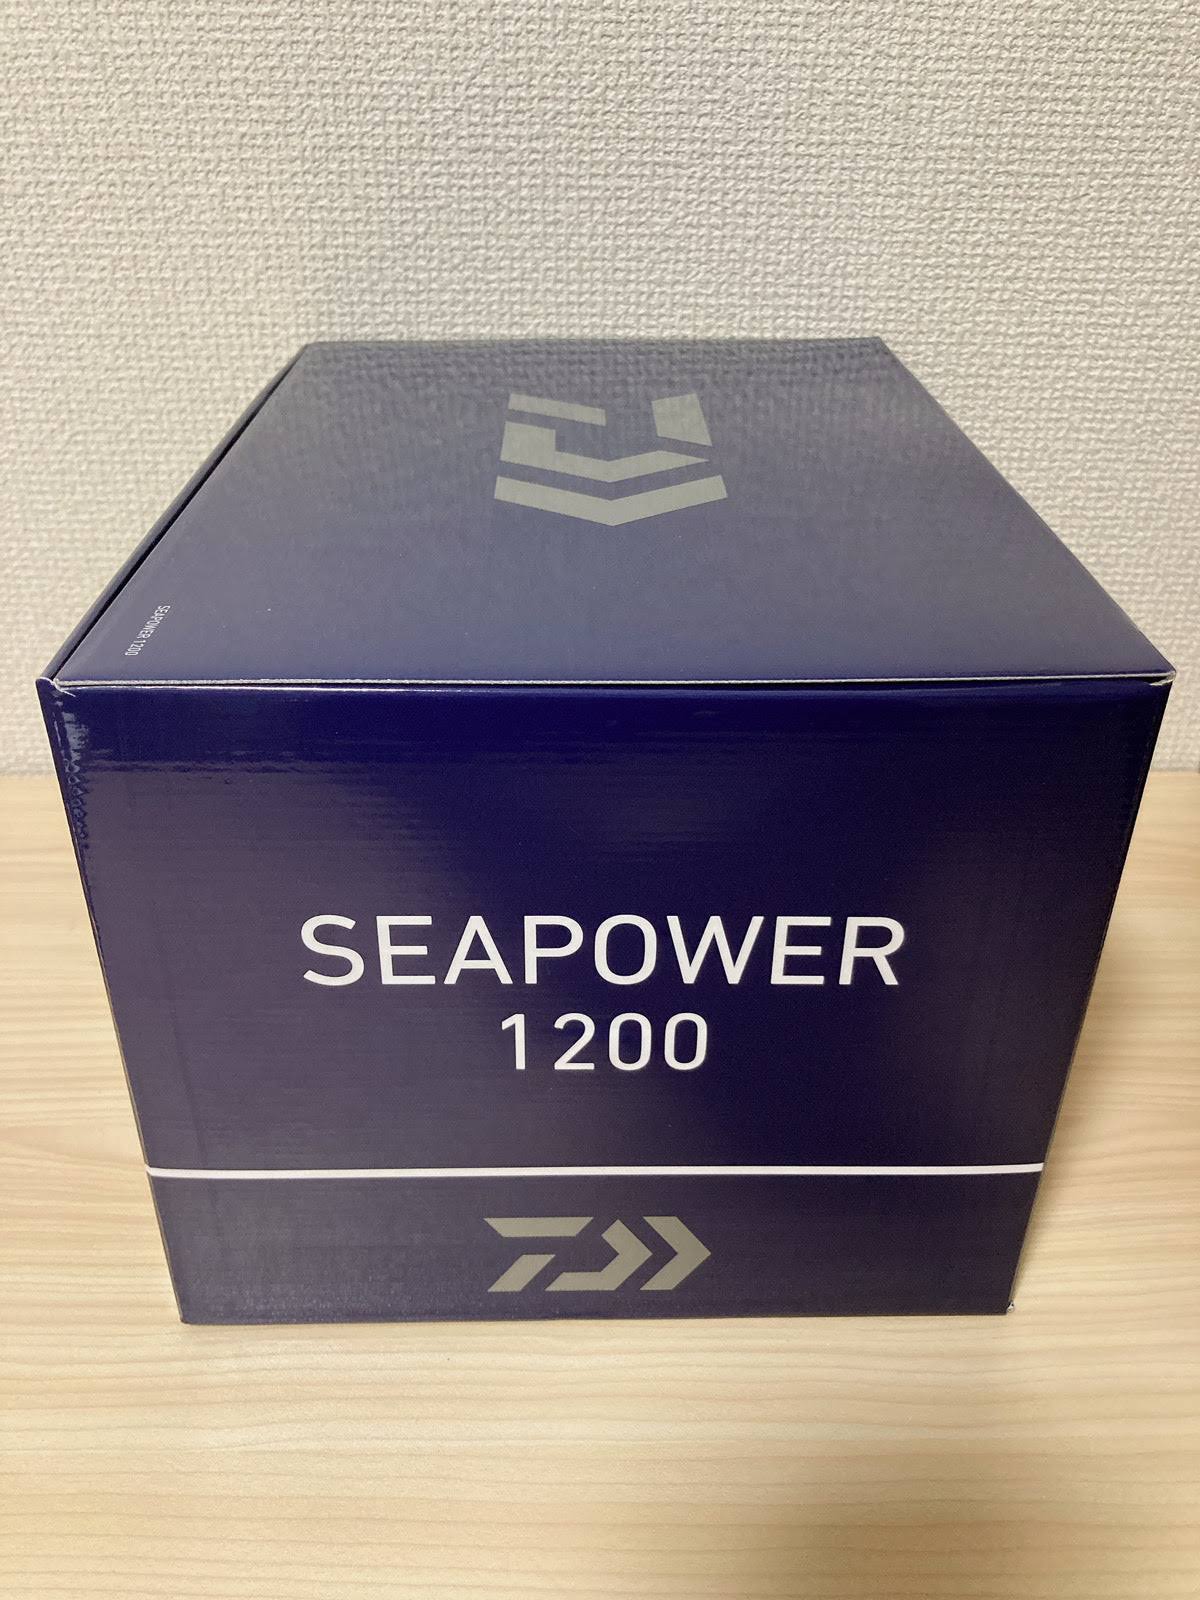 Daiwa Seapower 1200 Electric Fishing Reel with FREE RB700 Starter Kit